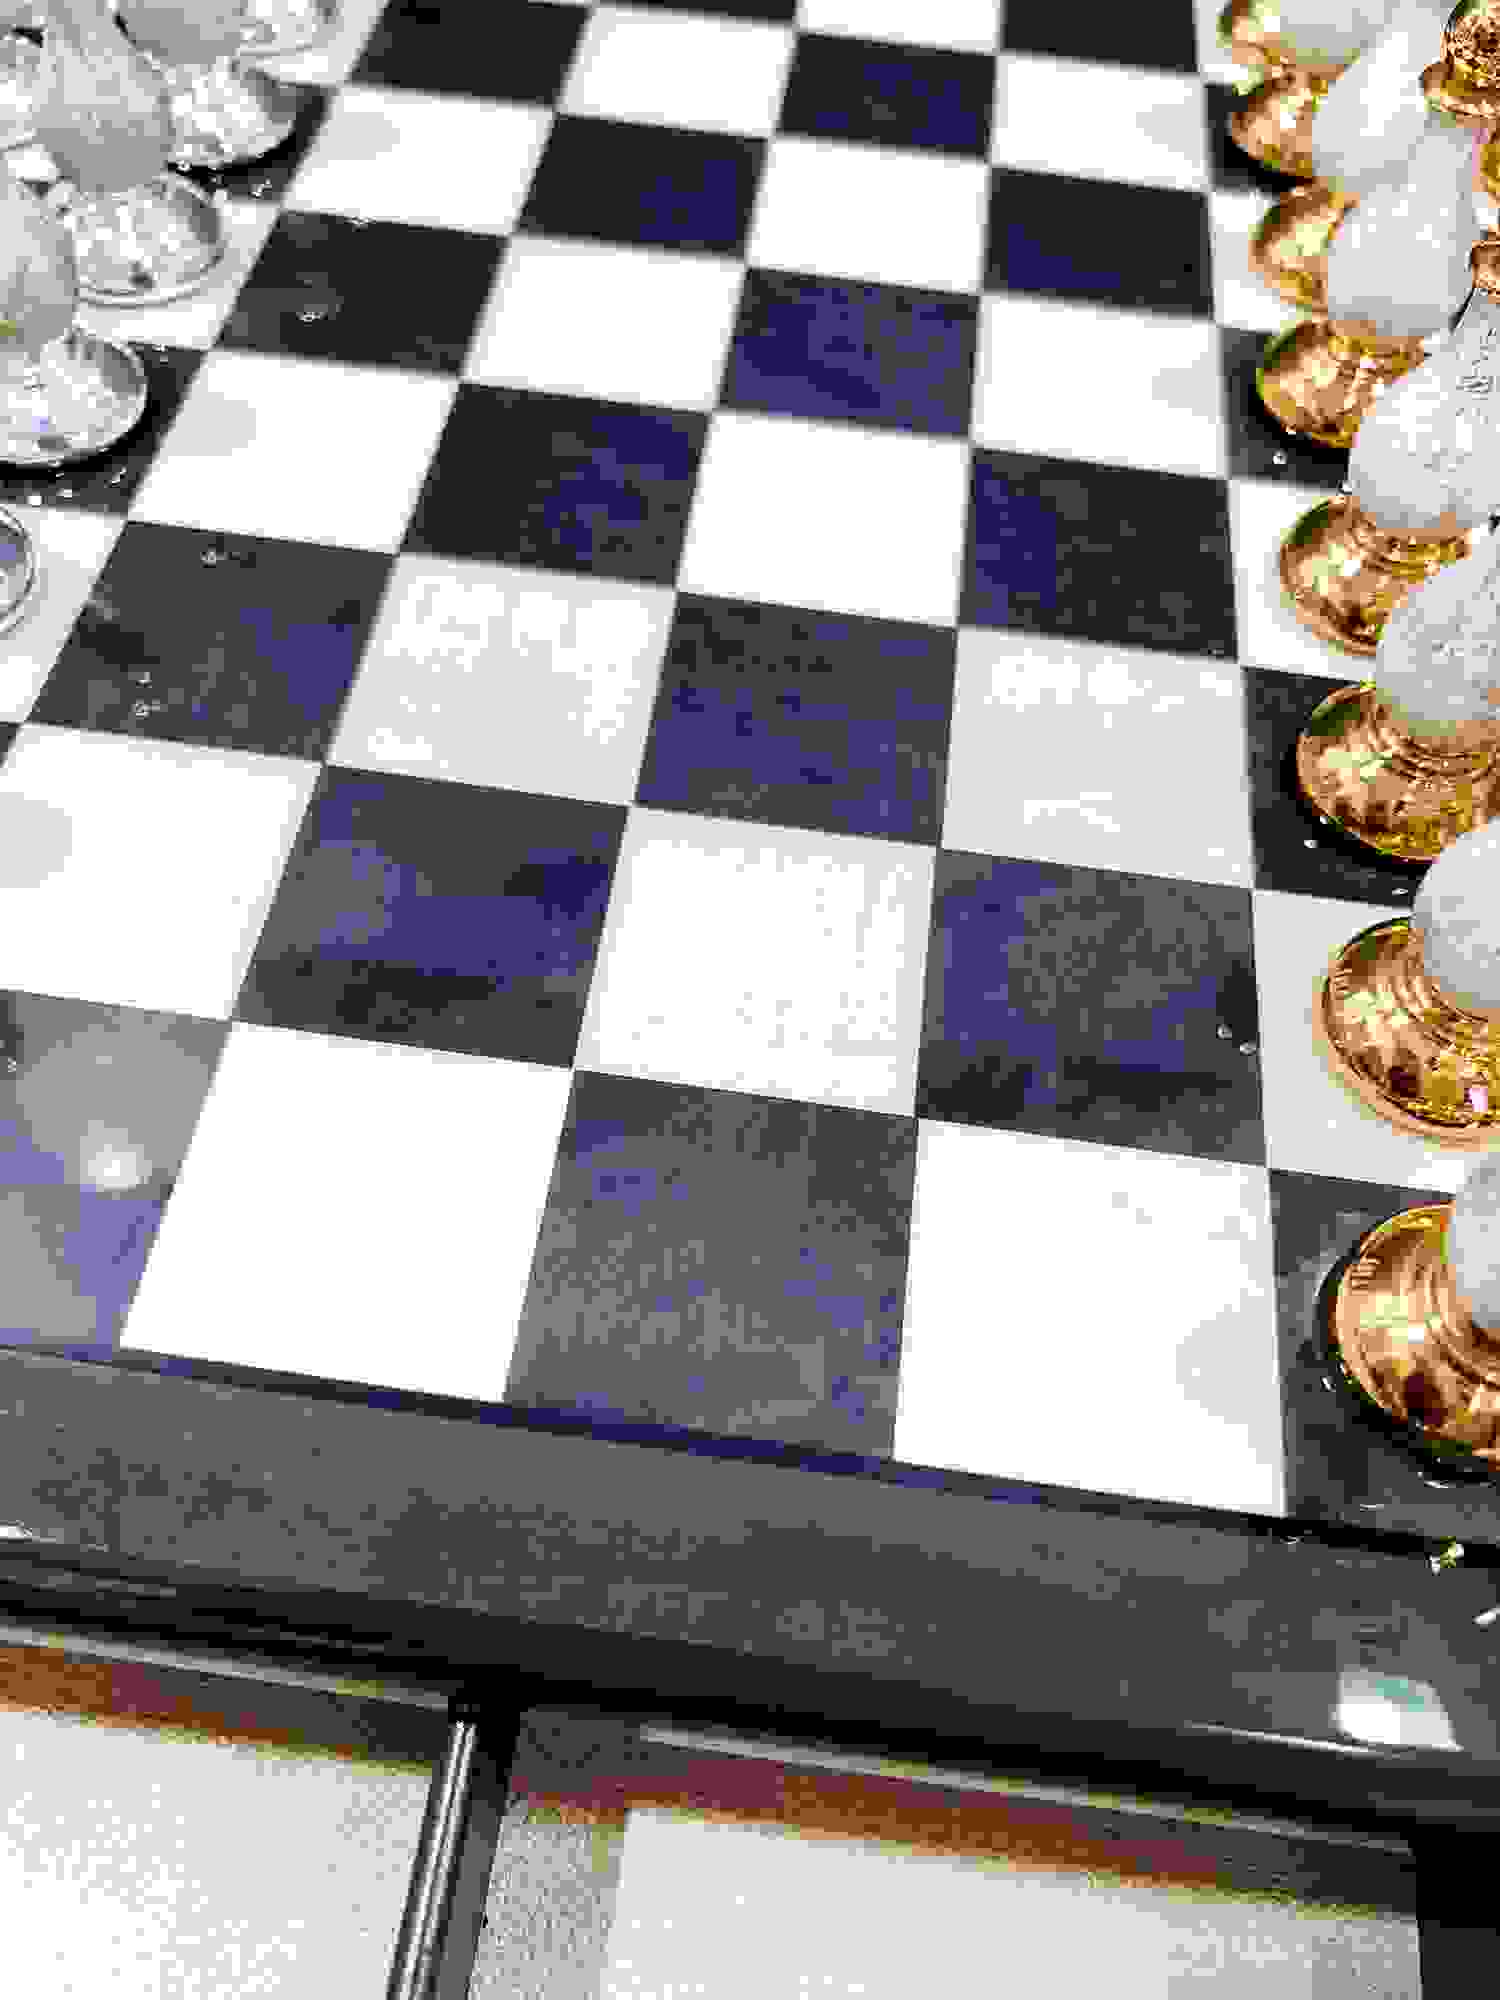 Italfama Glossy Grey Briar Wood Chess Set 333GLP + 151GS-DEC-0